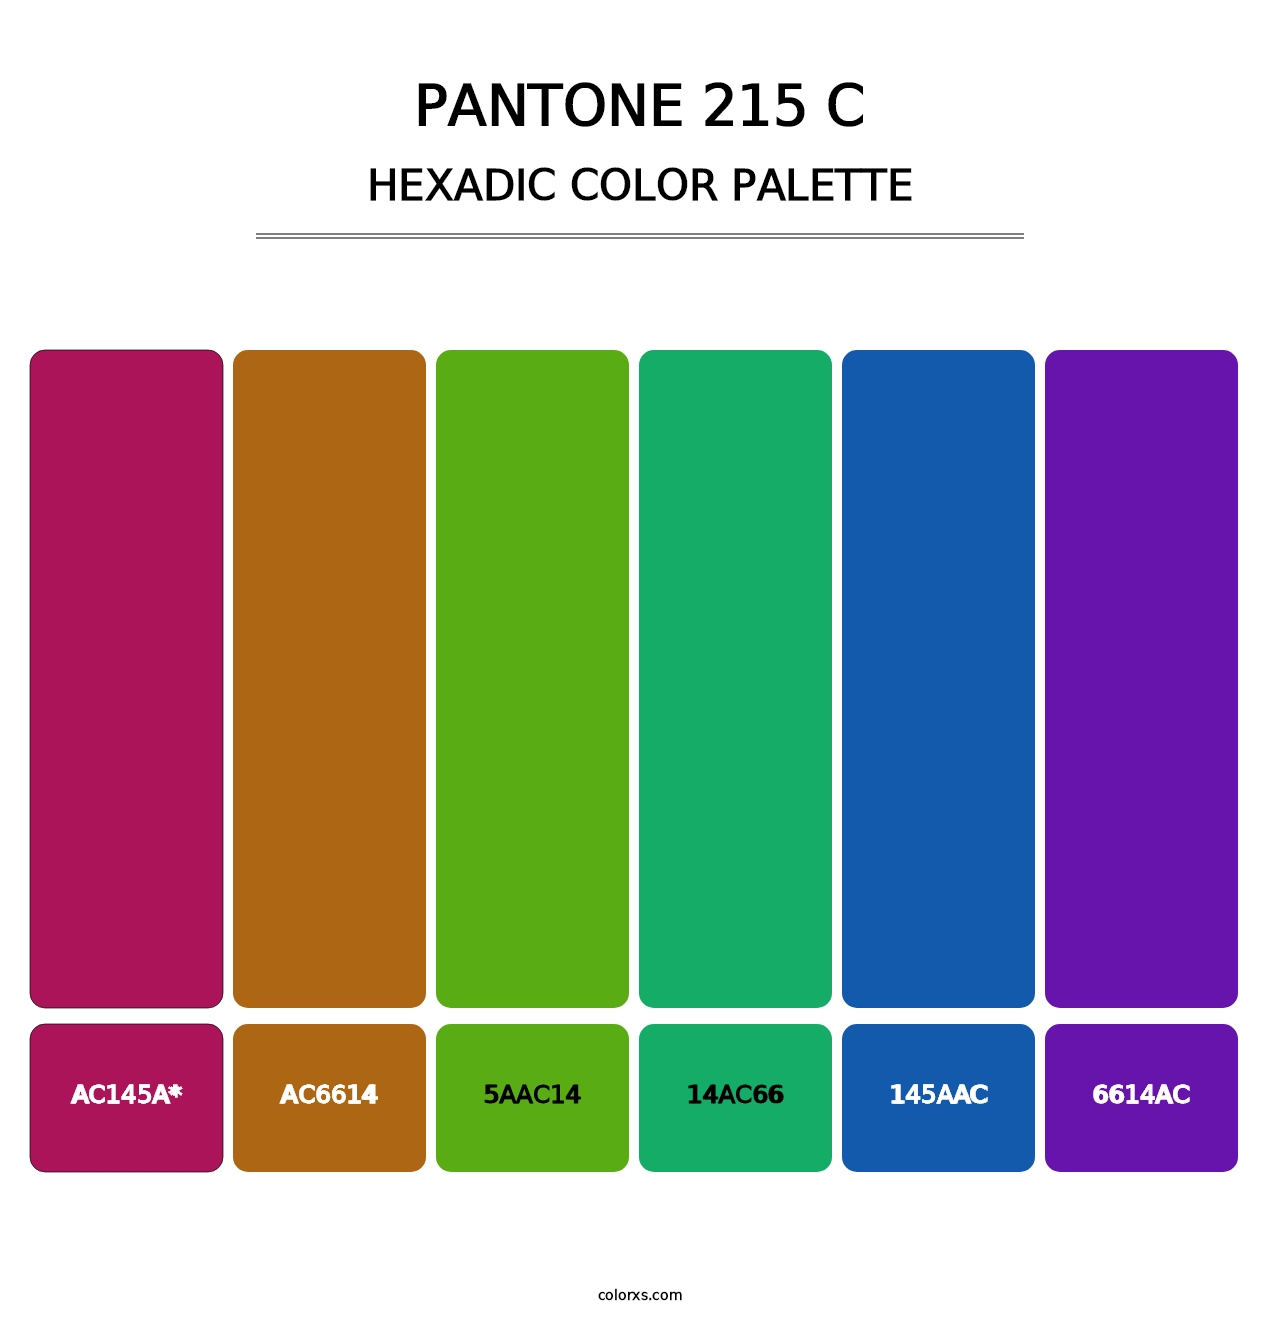 PANTONE 215 C - Hexadic Color Palette